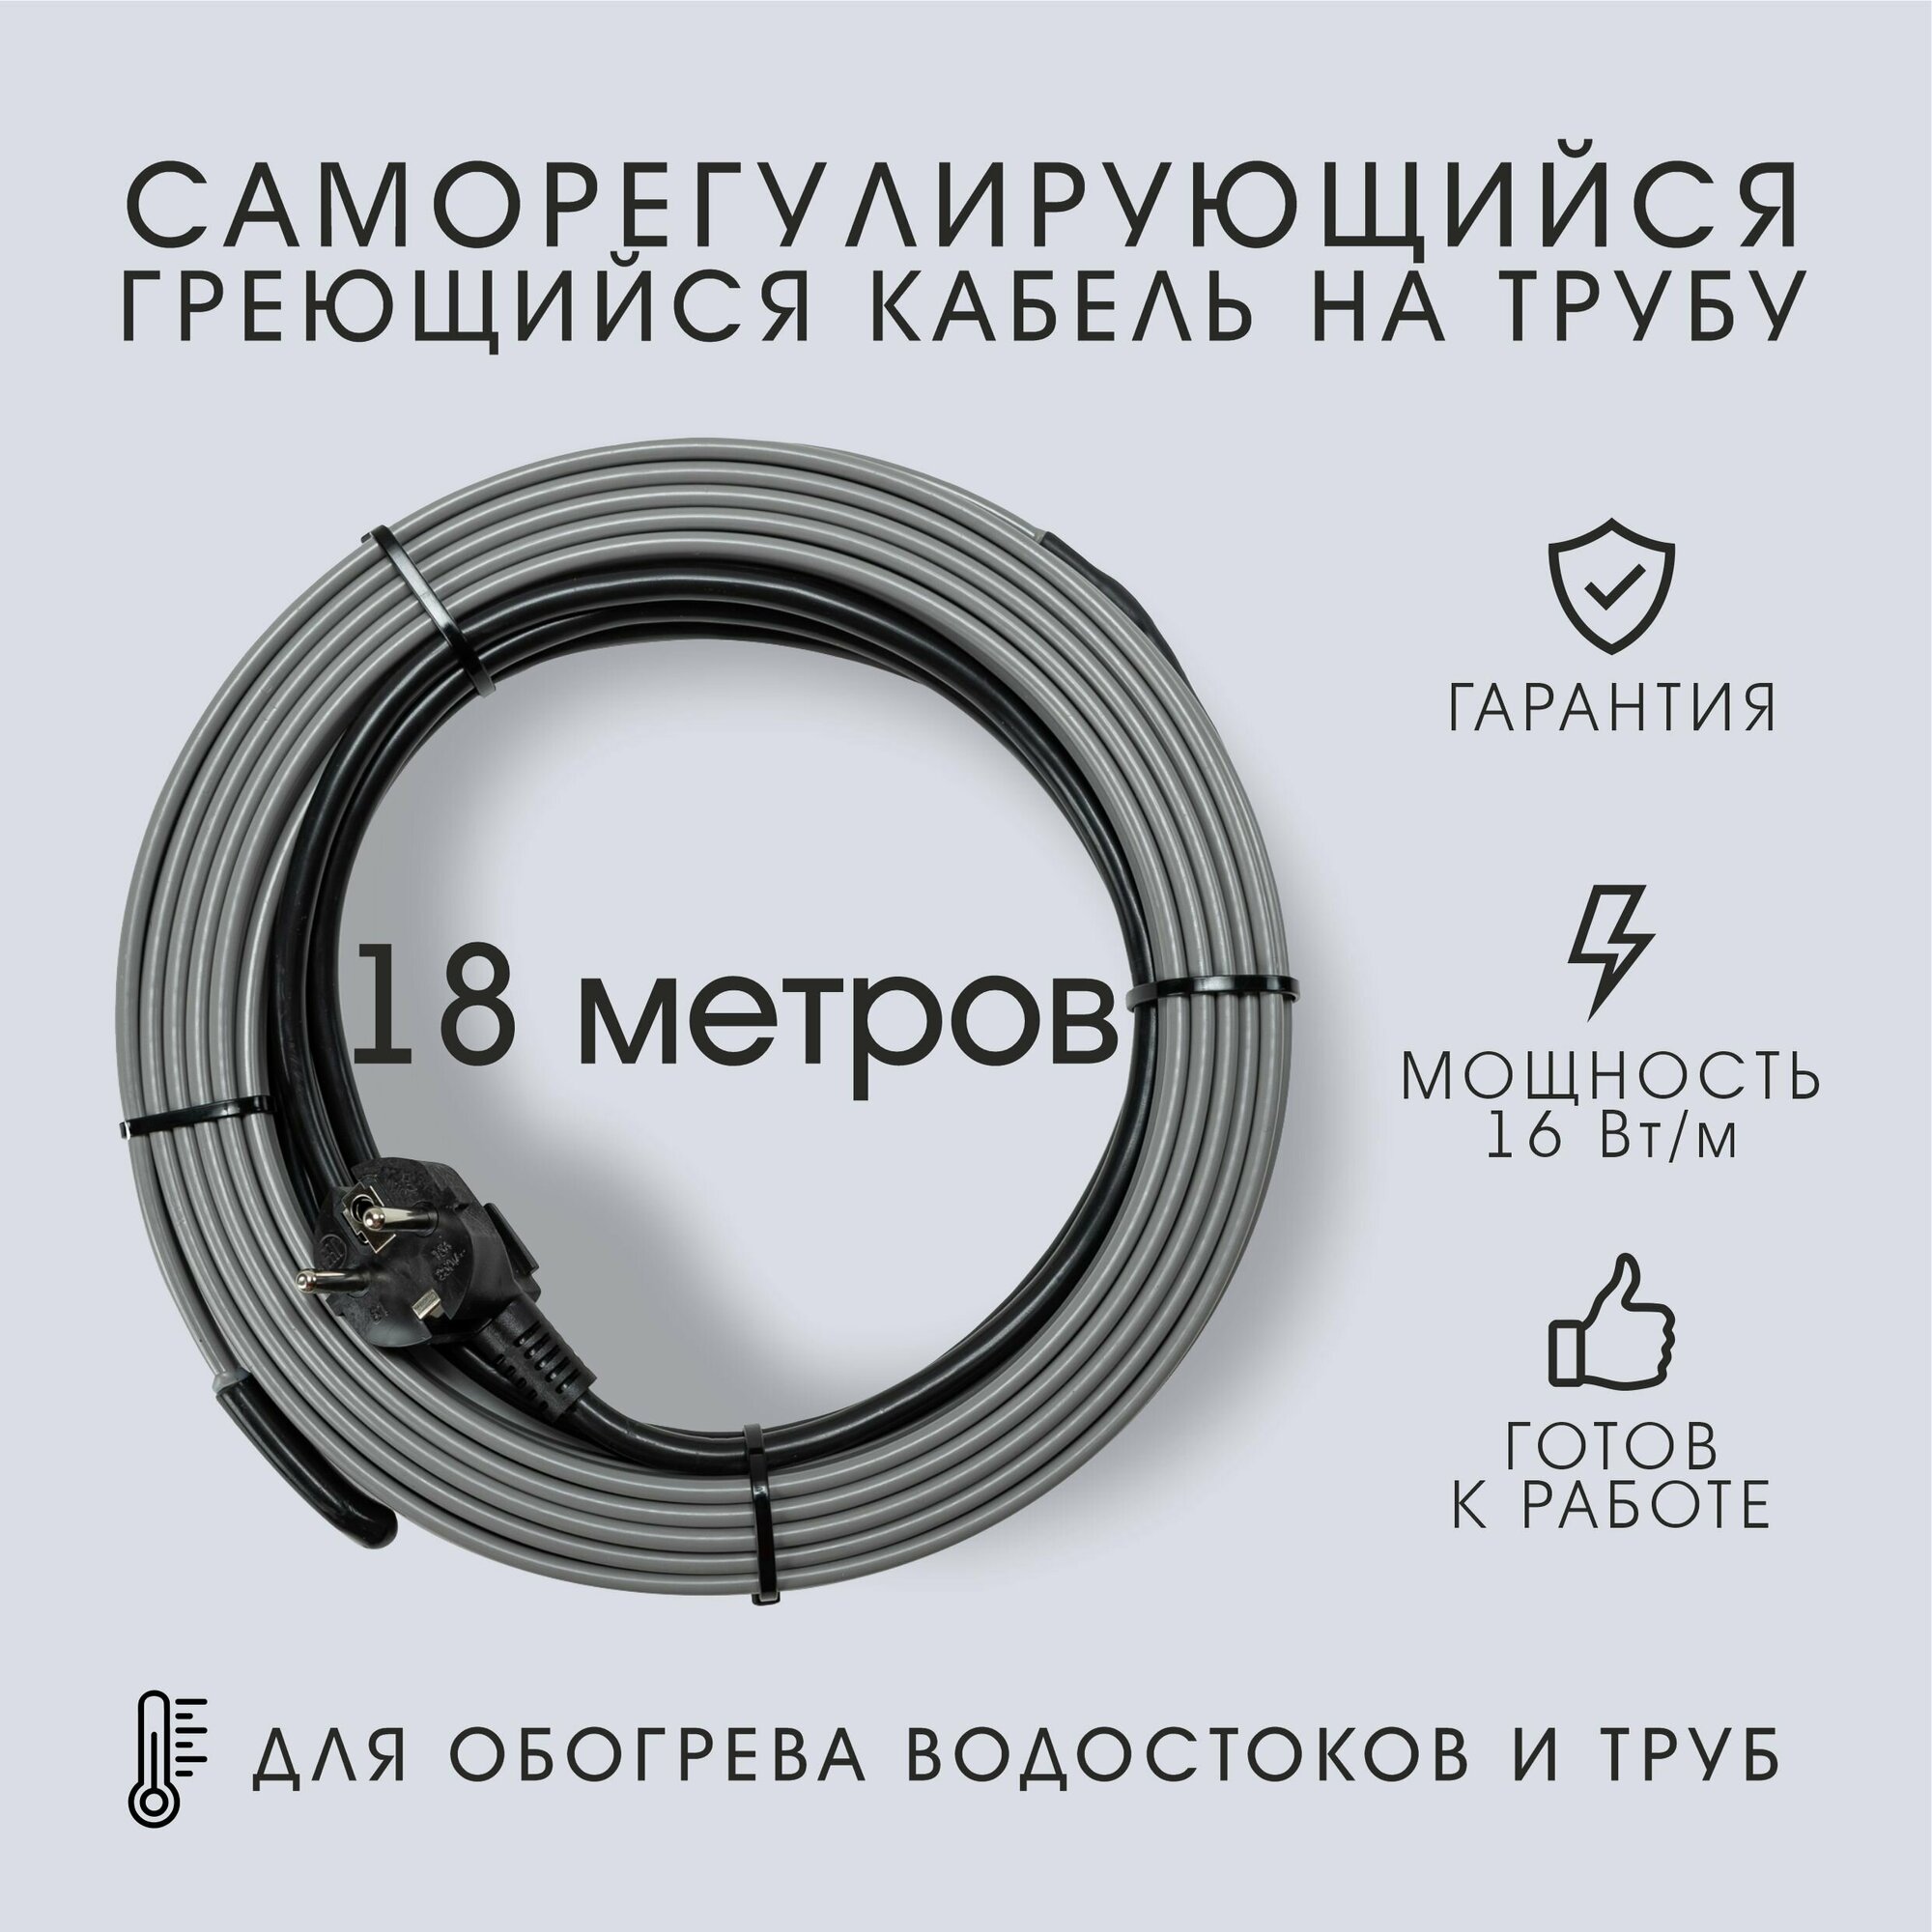 Саморегулирующийся греющий кабель на трубу SRL 16Вт/м в сборе (18м)